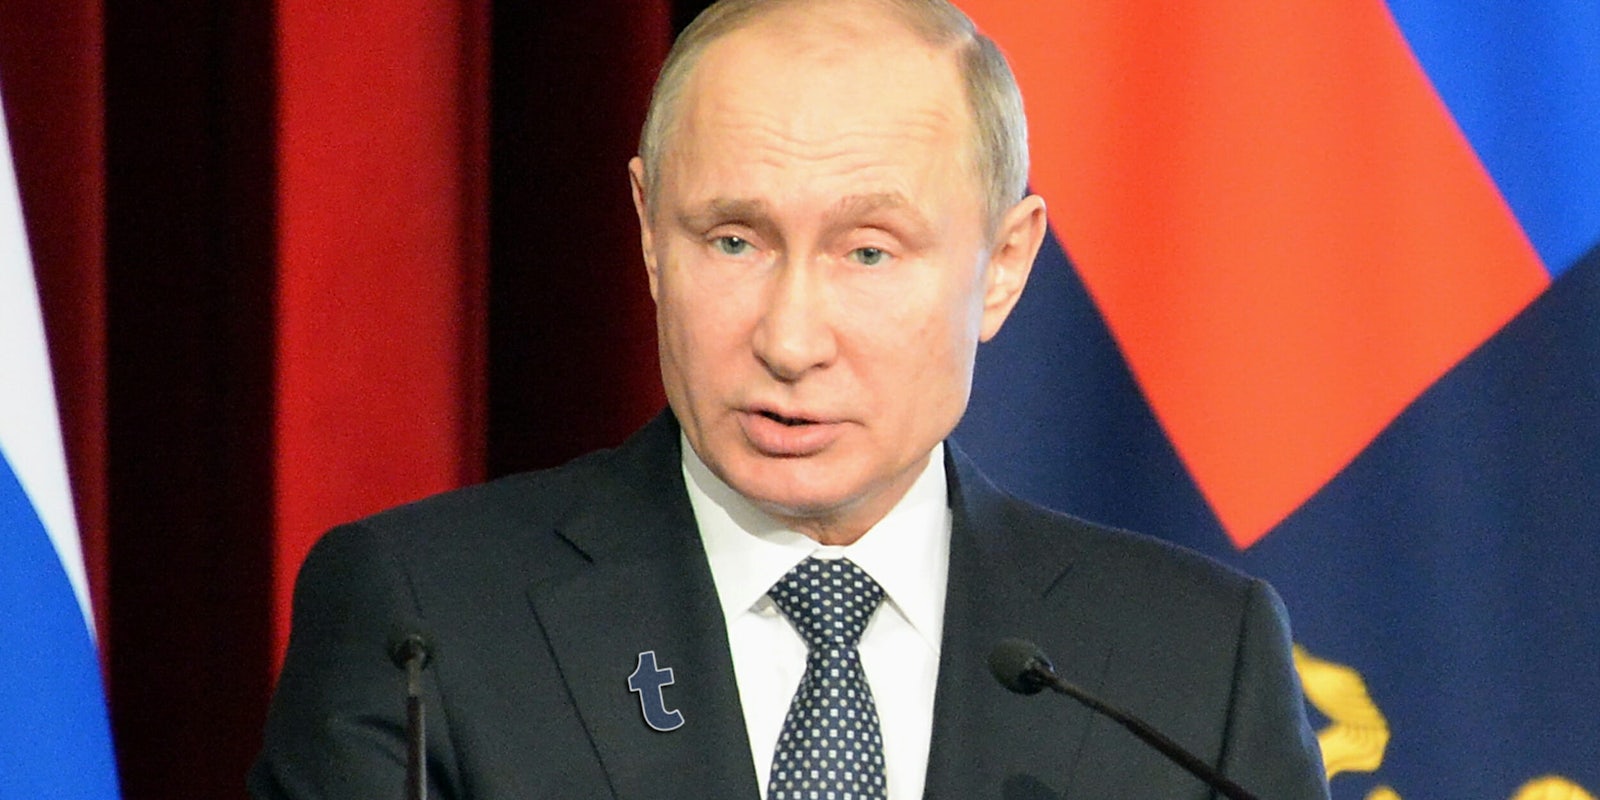 Vladimir Putin with Tumblr pin